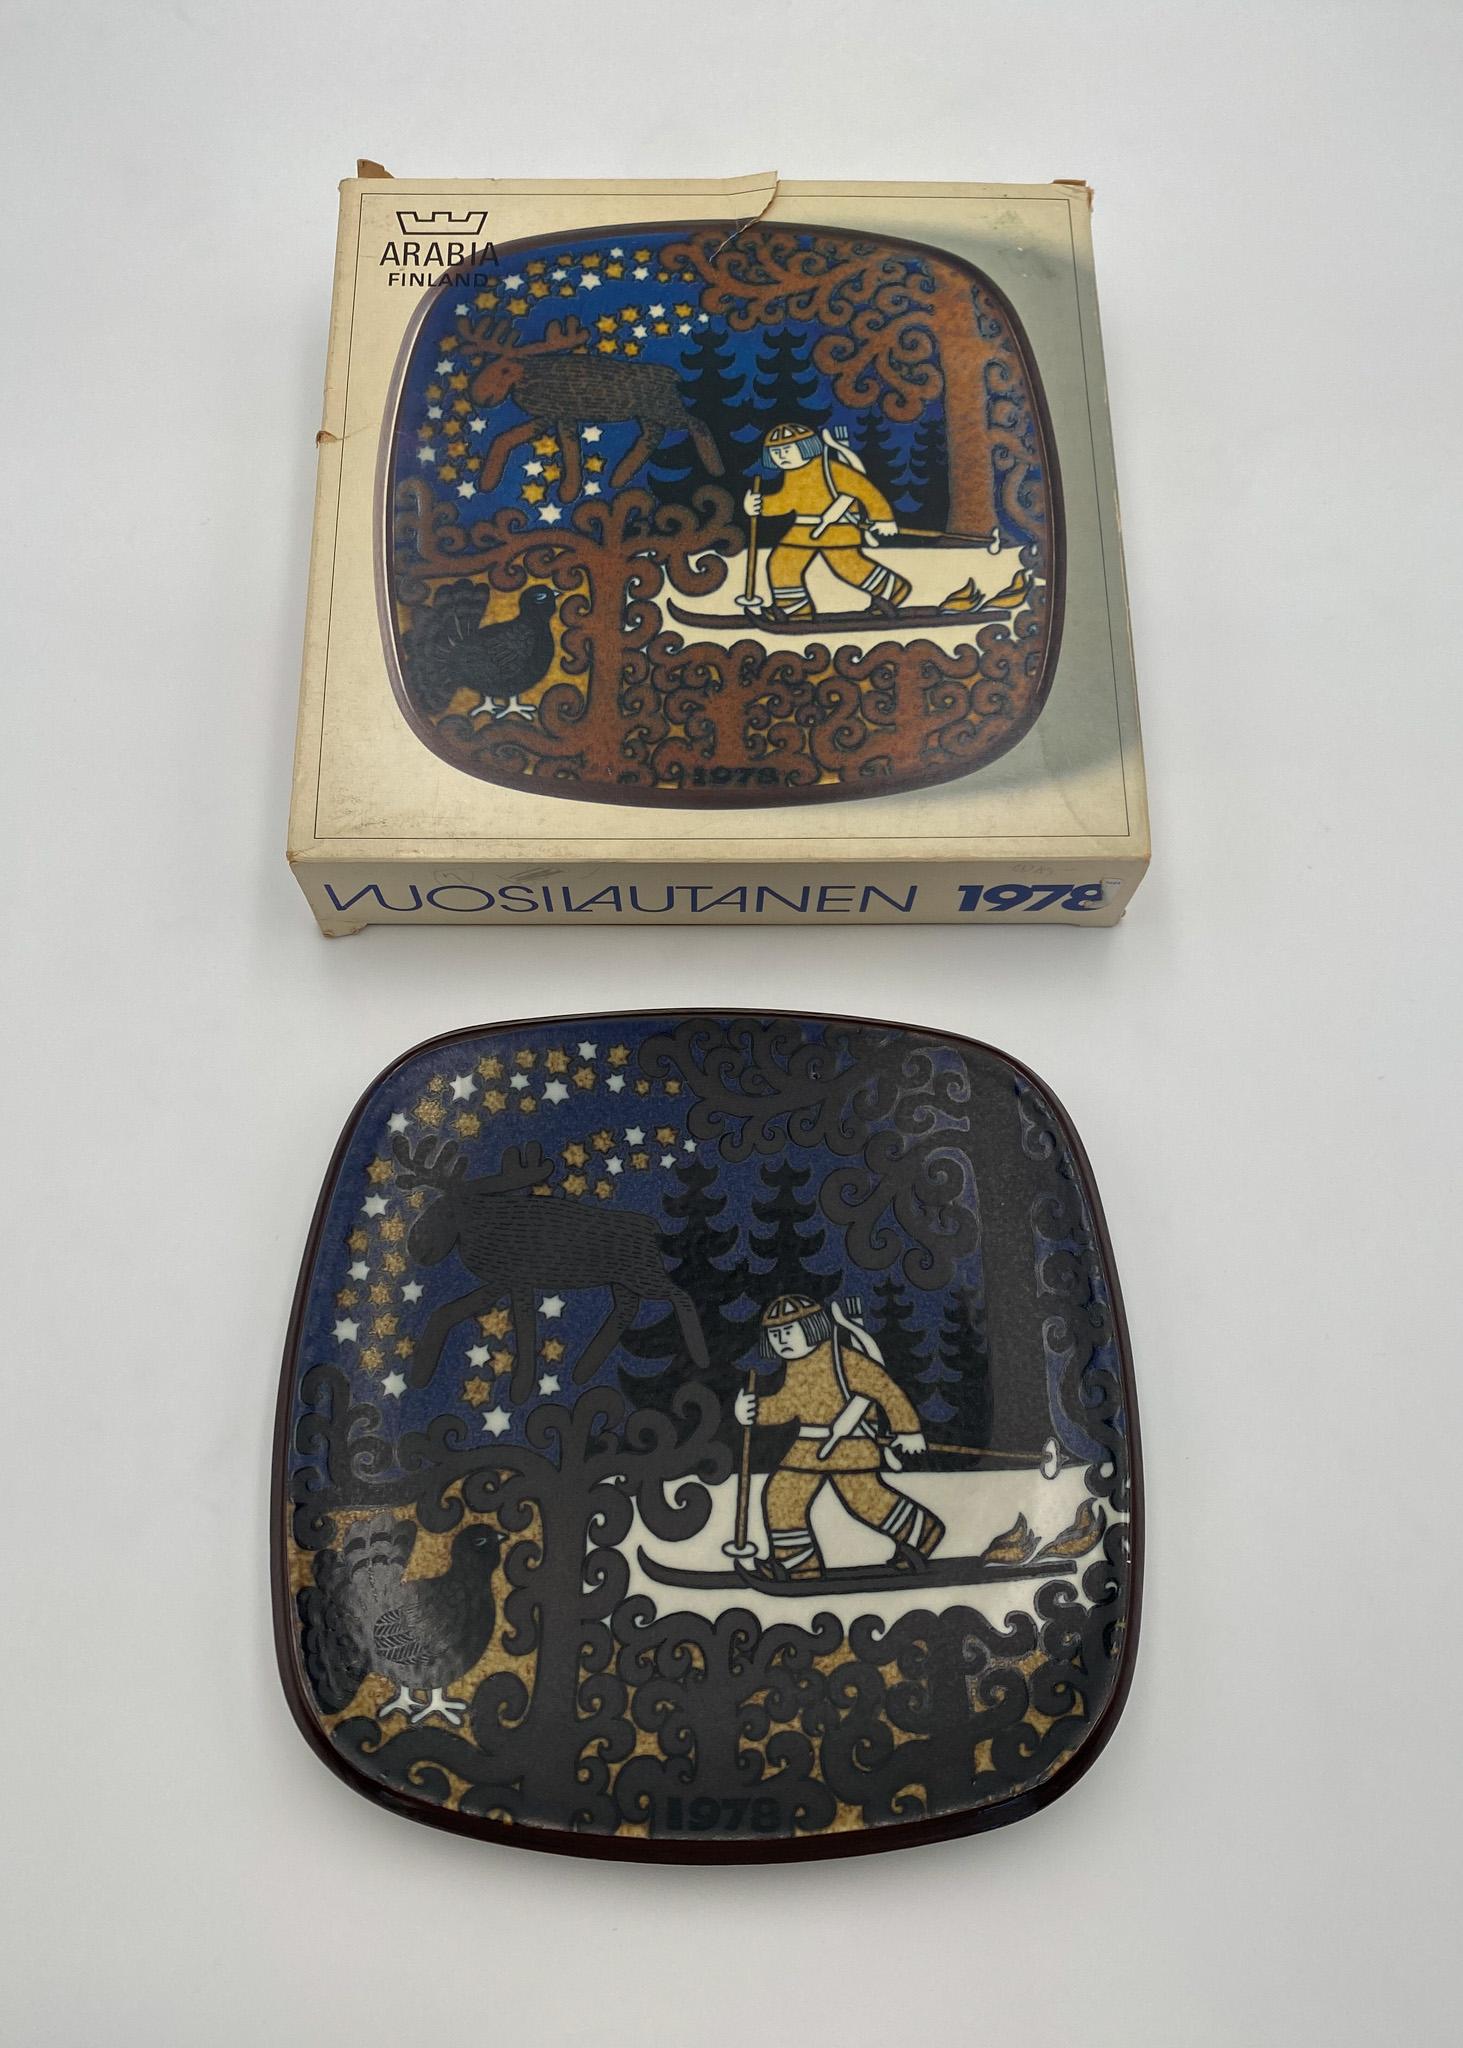 Glazed Raija Uosikkinen Decorative Plate for Arabia of Finland, 1978 For Sale